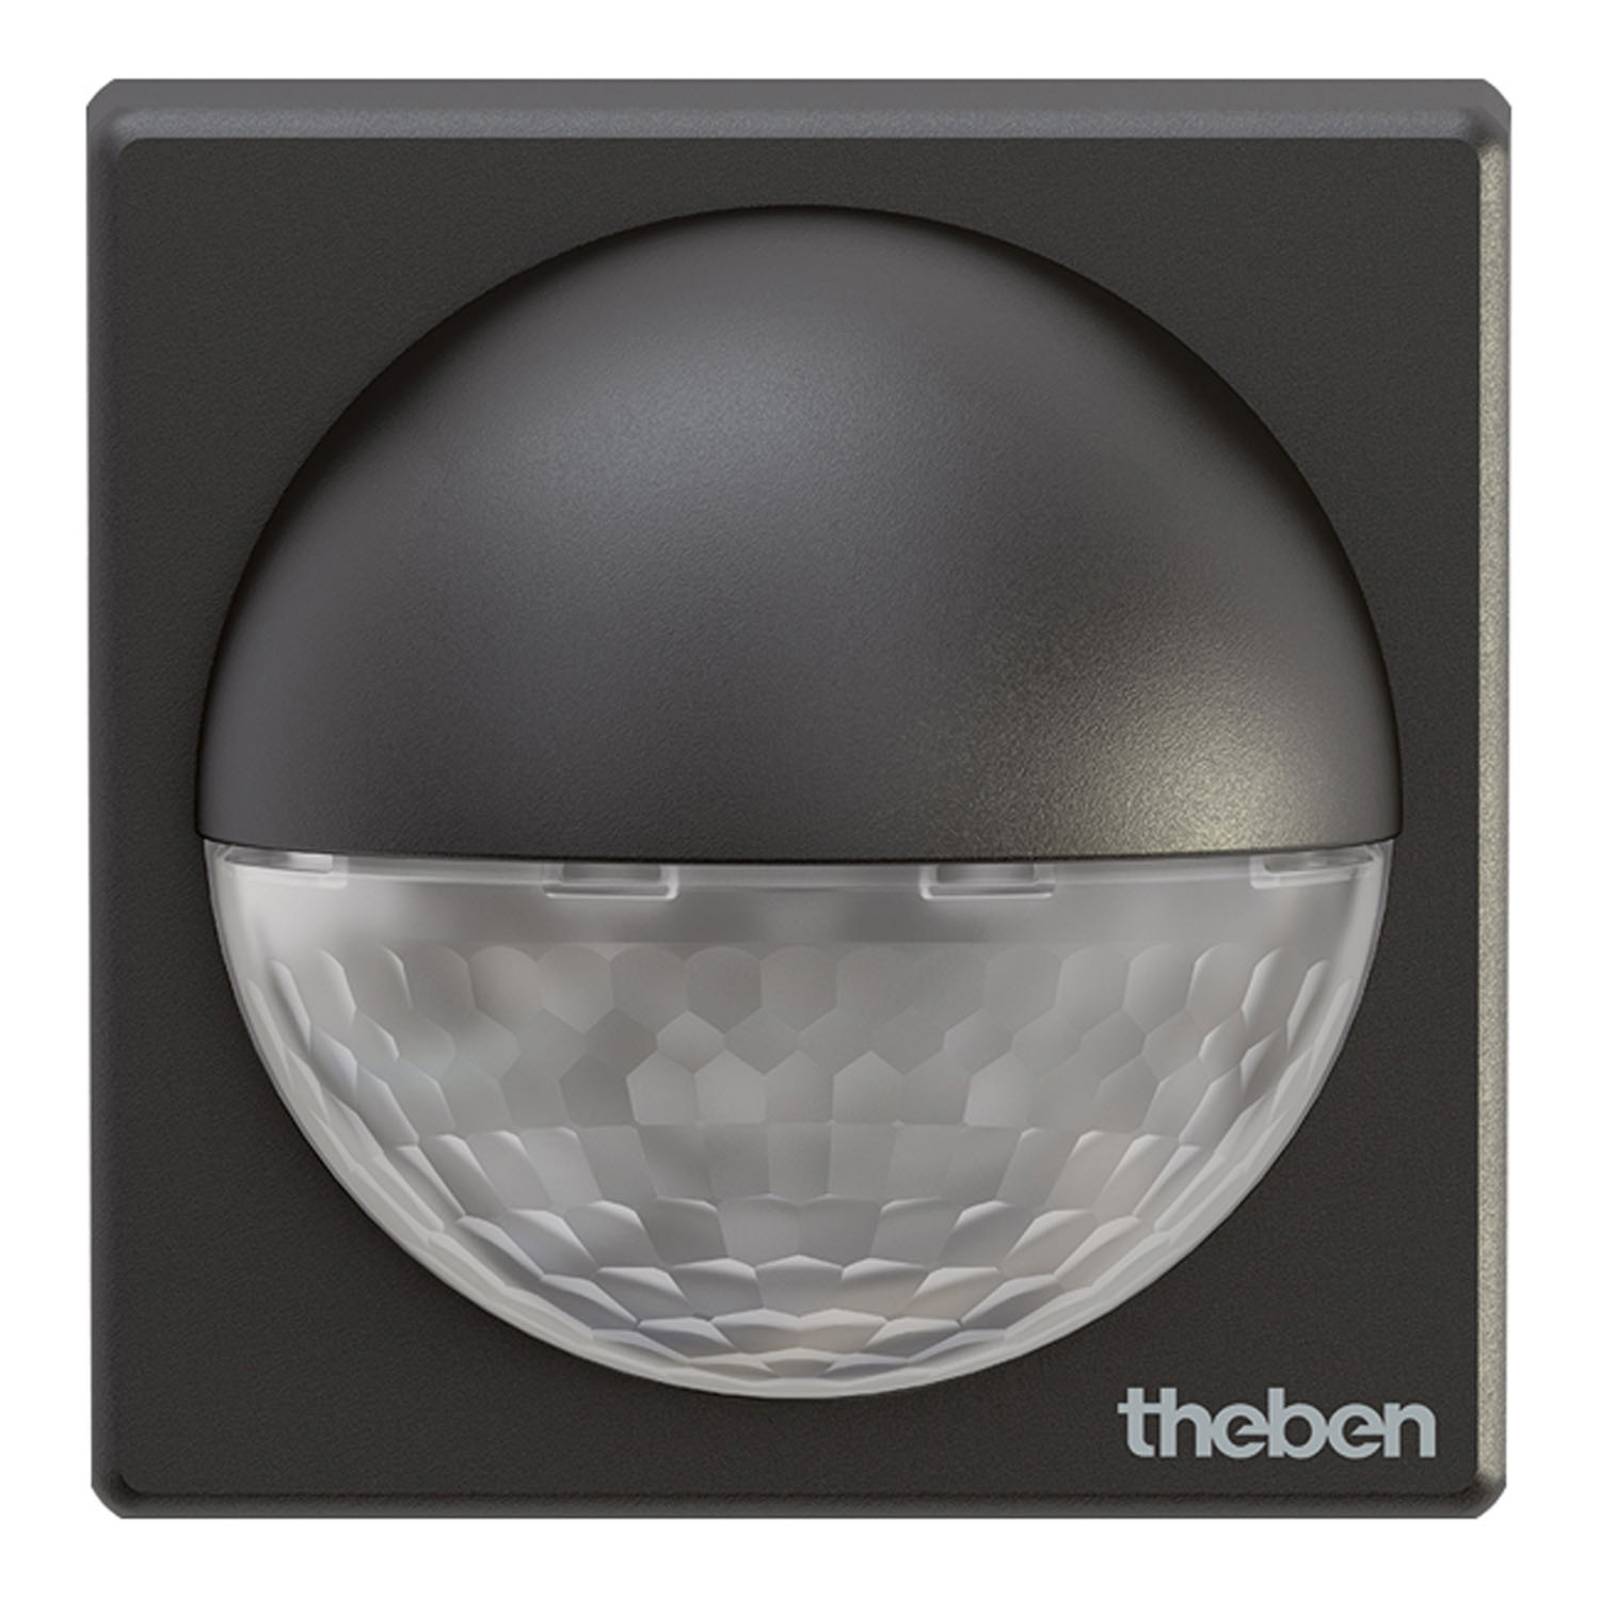 Theben Theben theLuxa R180 PIR senzor pohybu černá